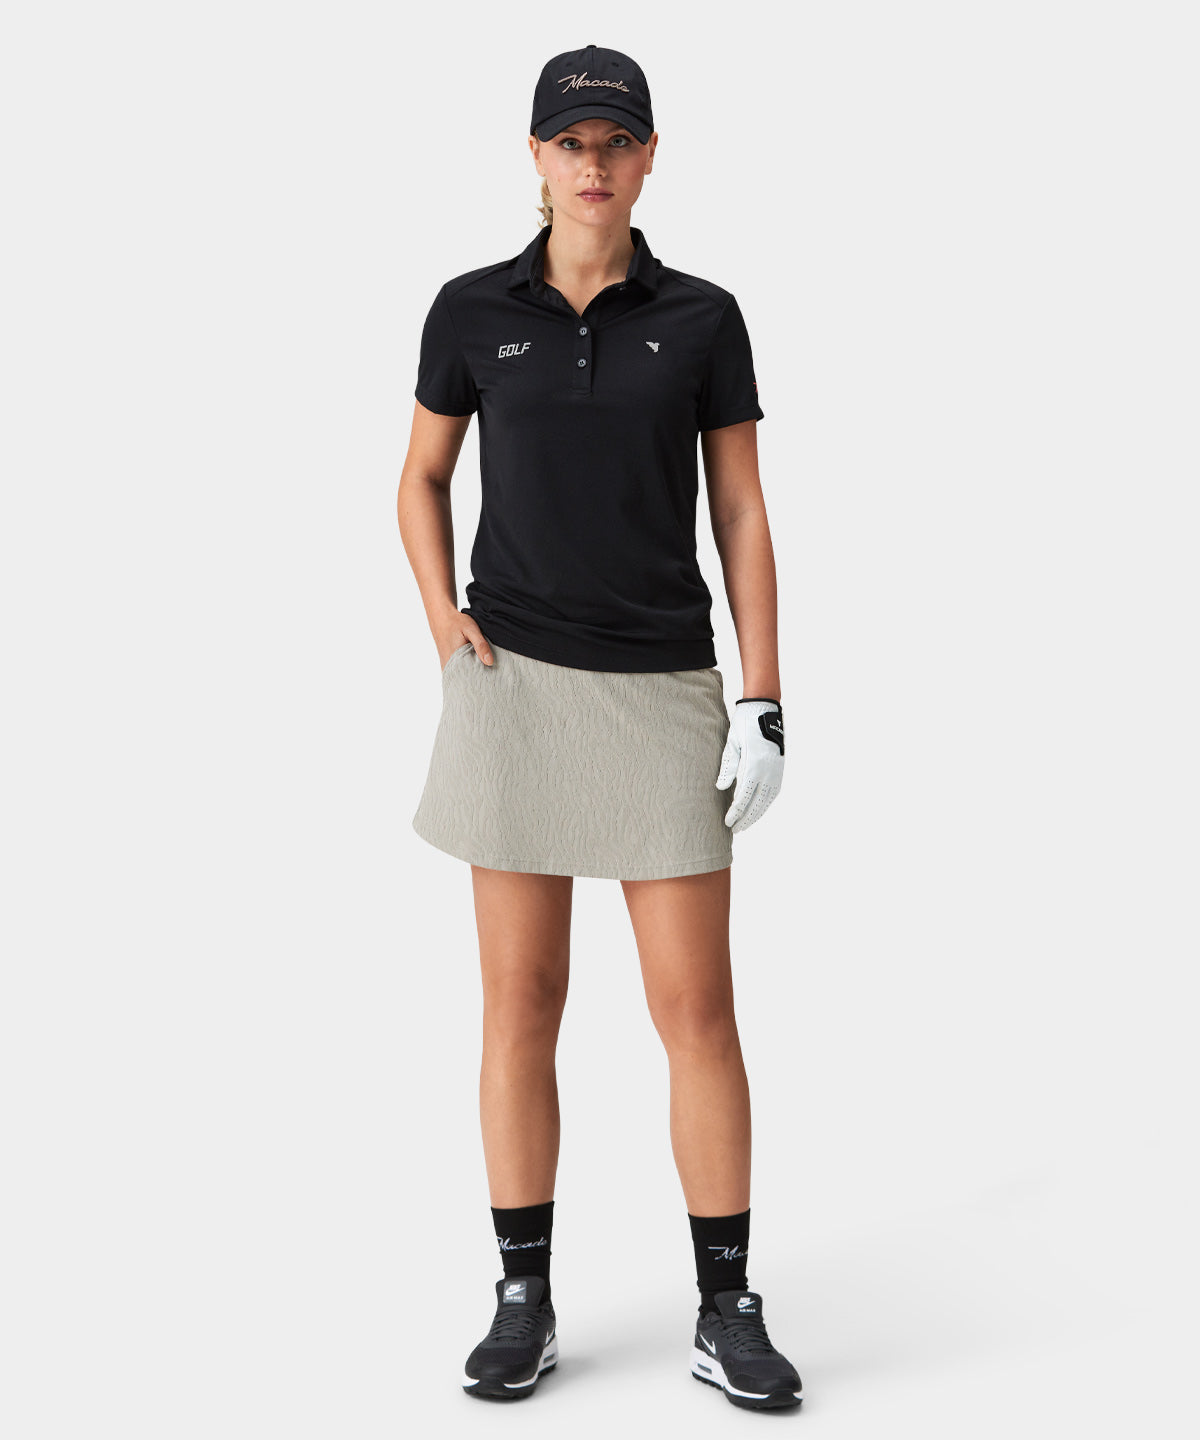 Rori Cedar Performance Skirt Macade Golf